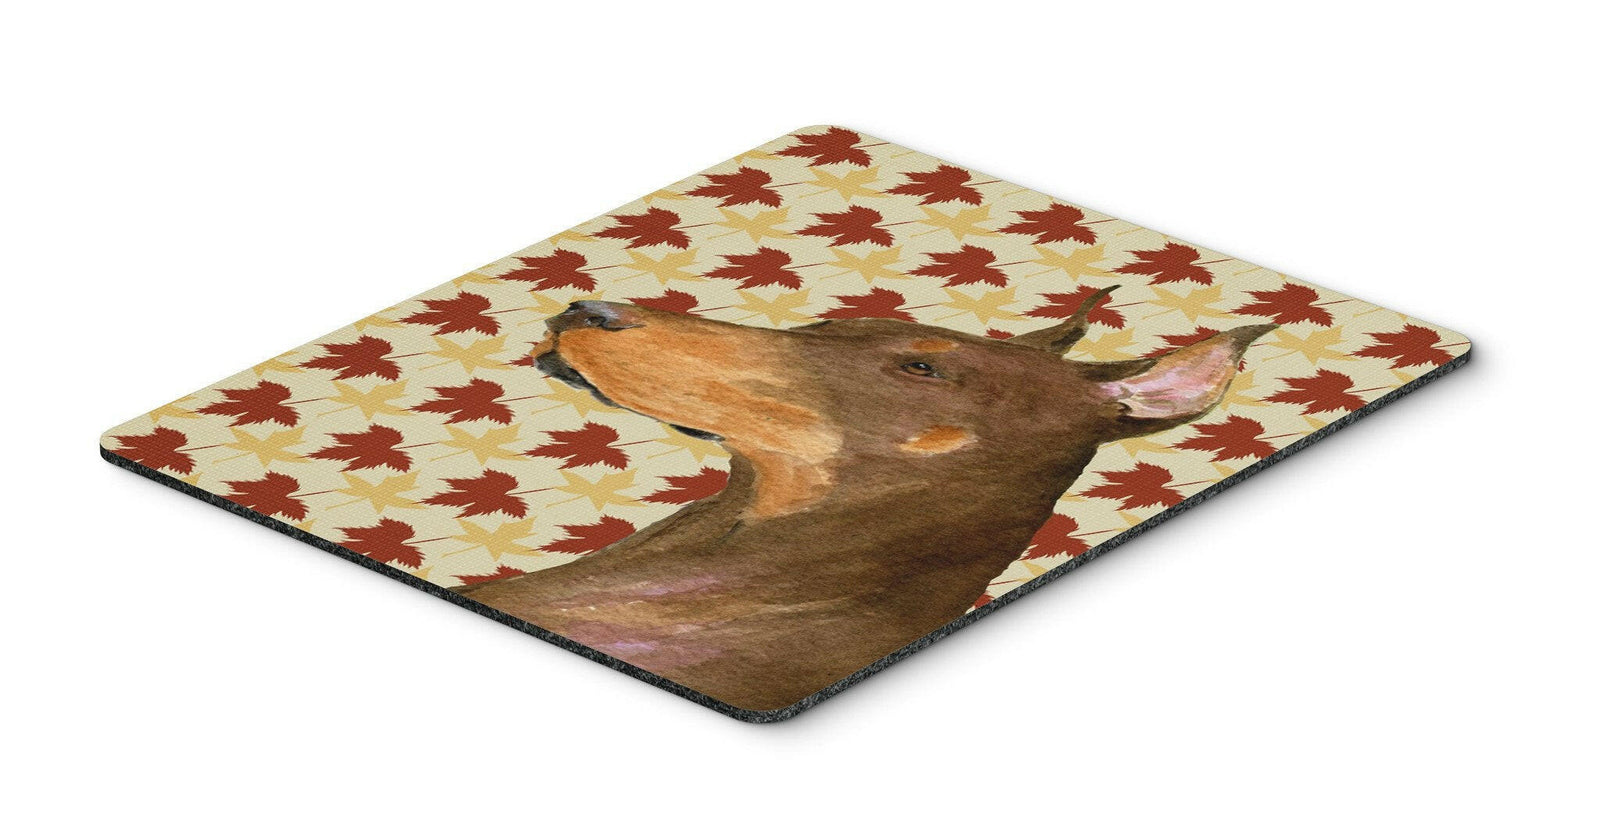 Doberman Fall Leaves Portrait Mouse Pad, Hot Pad or Trivet by Caroline's Treasures